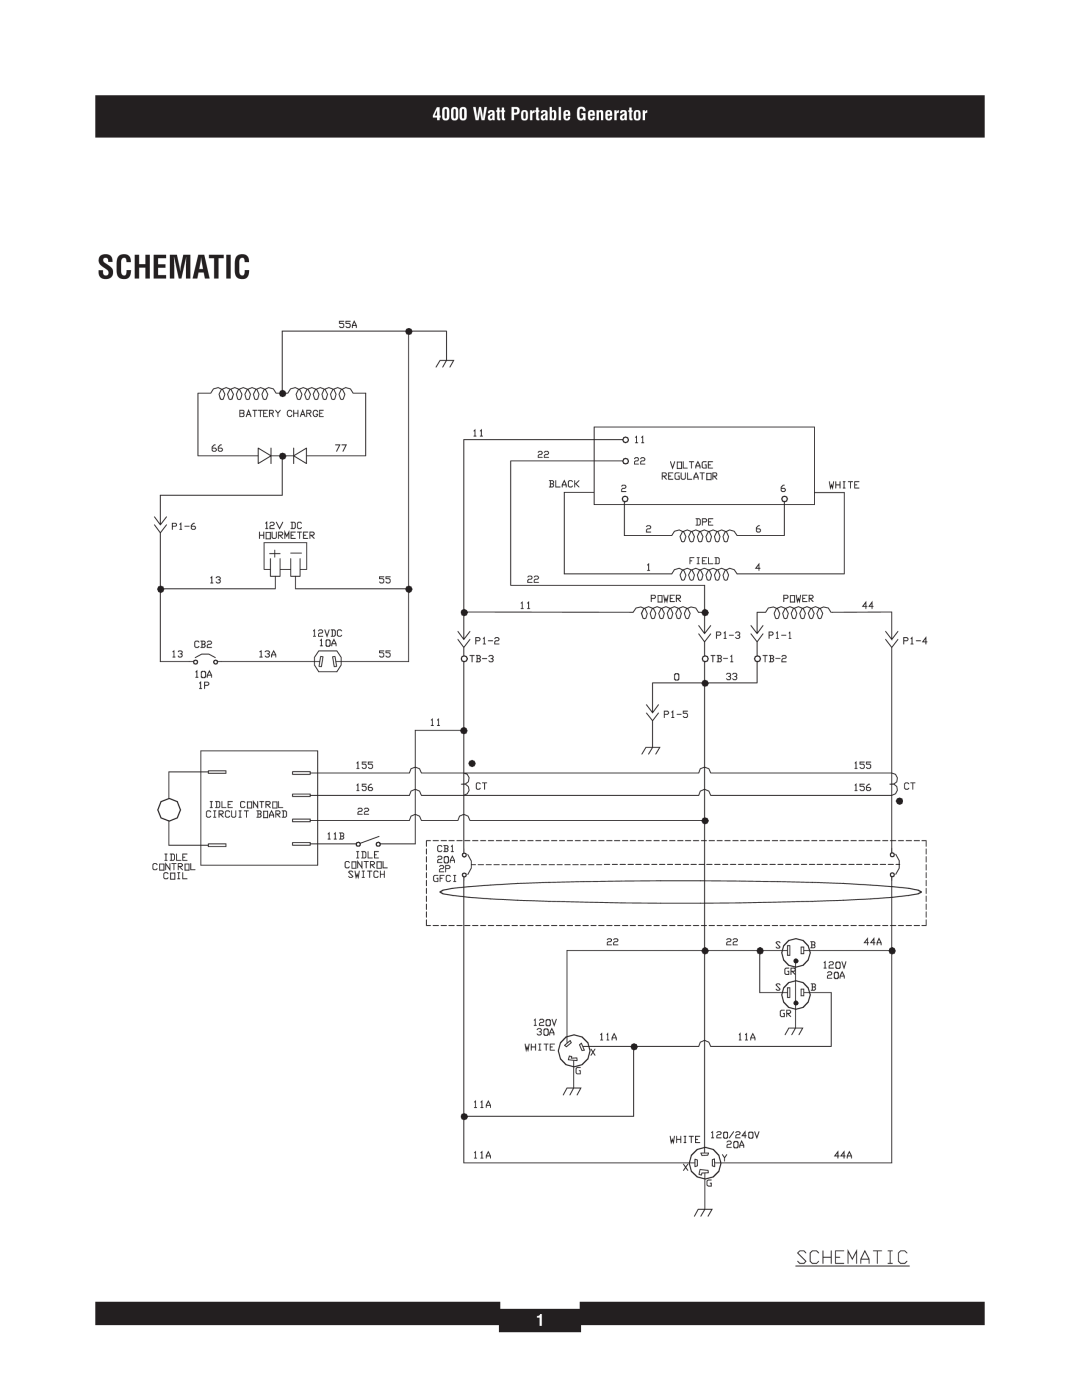 Briggs & Stratton 030335 manual Schematic, Watt Portable Generator 